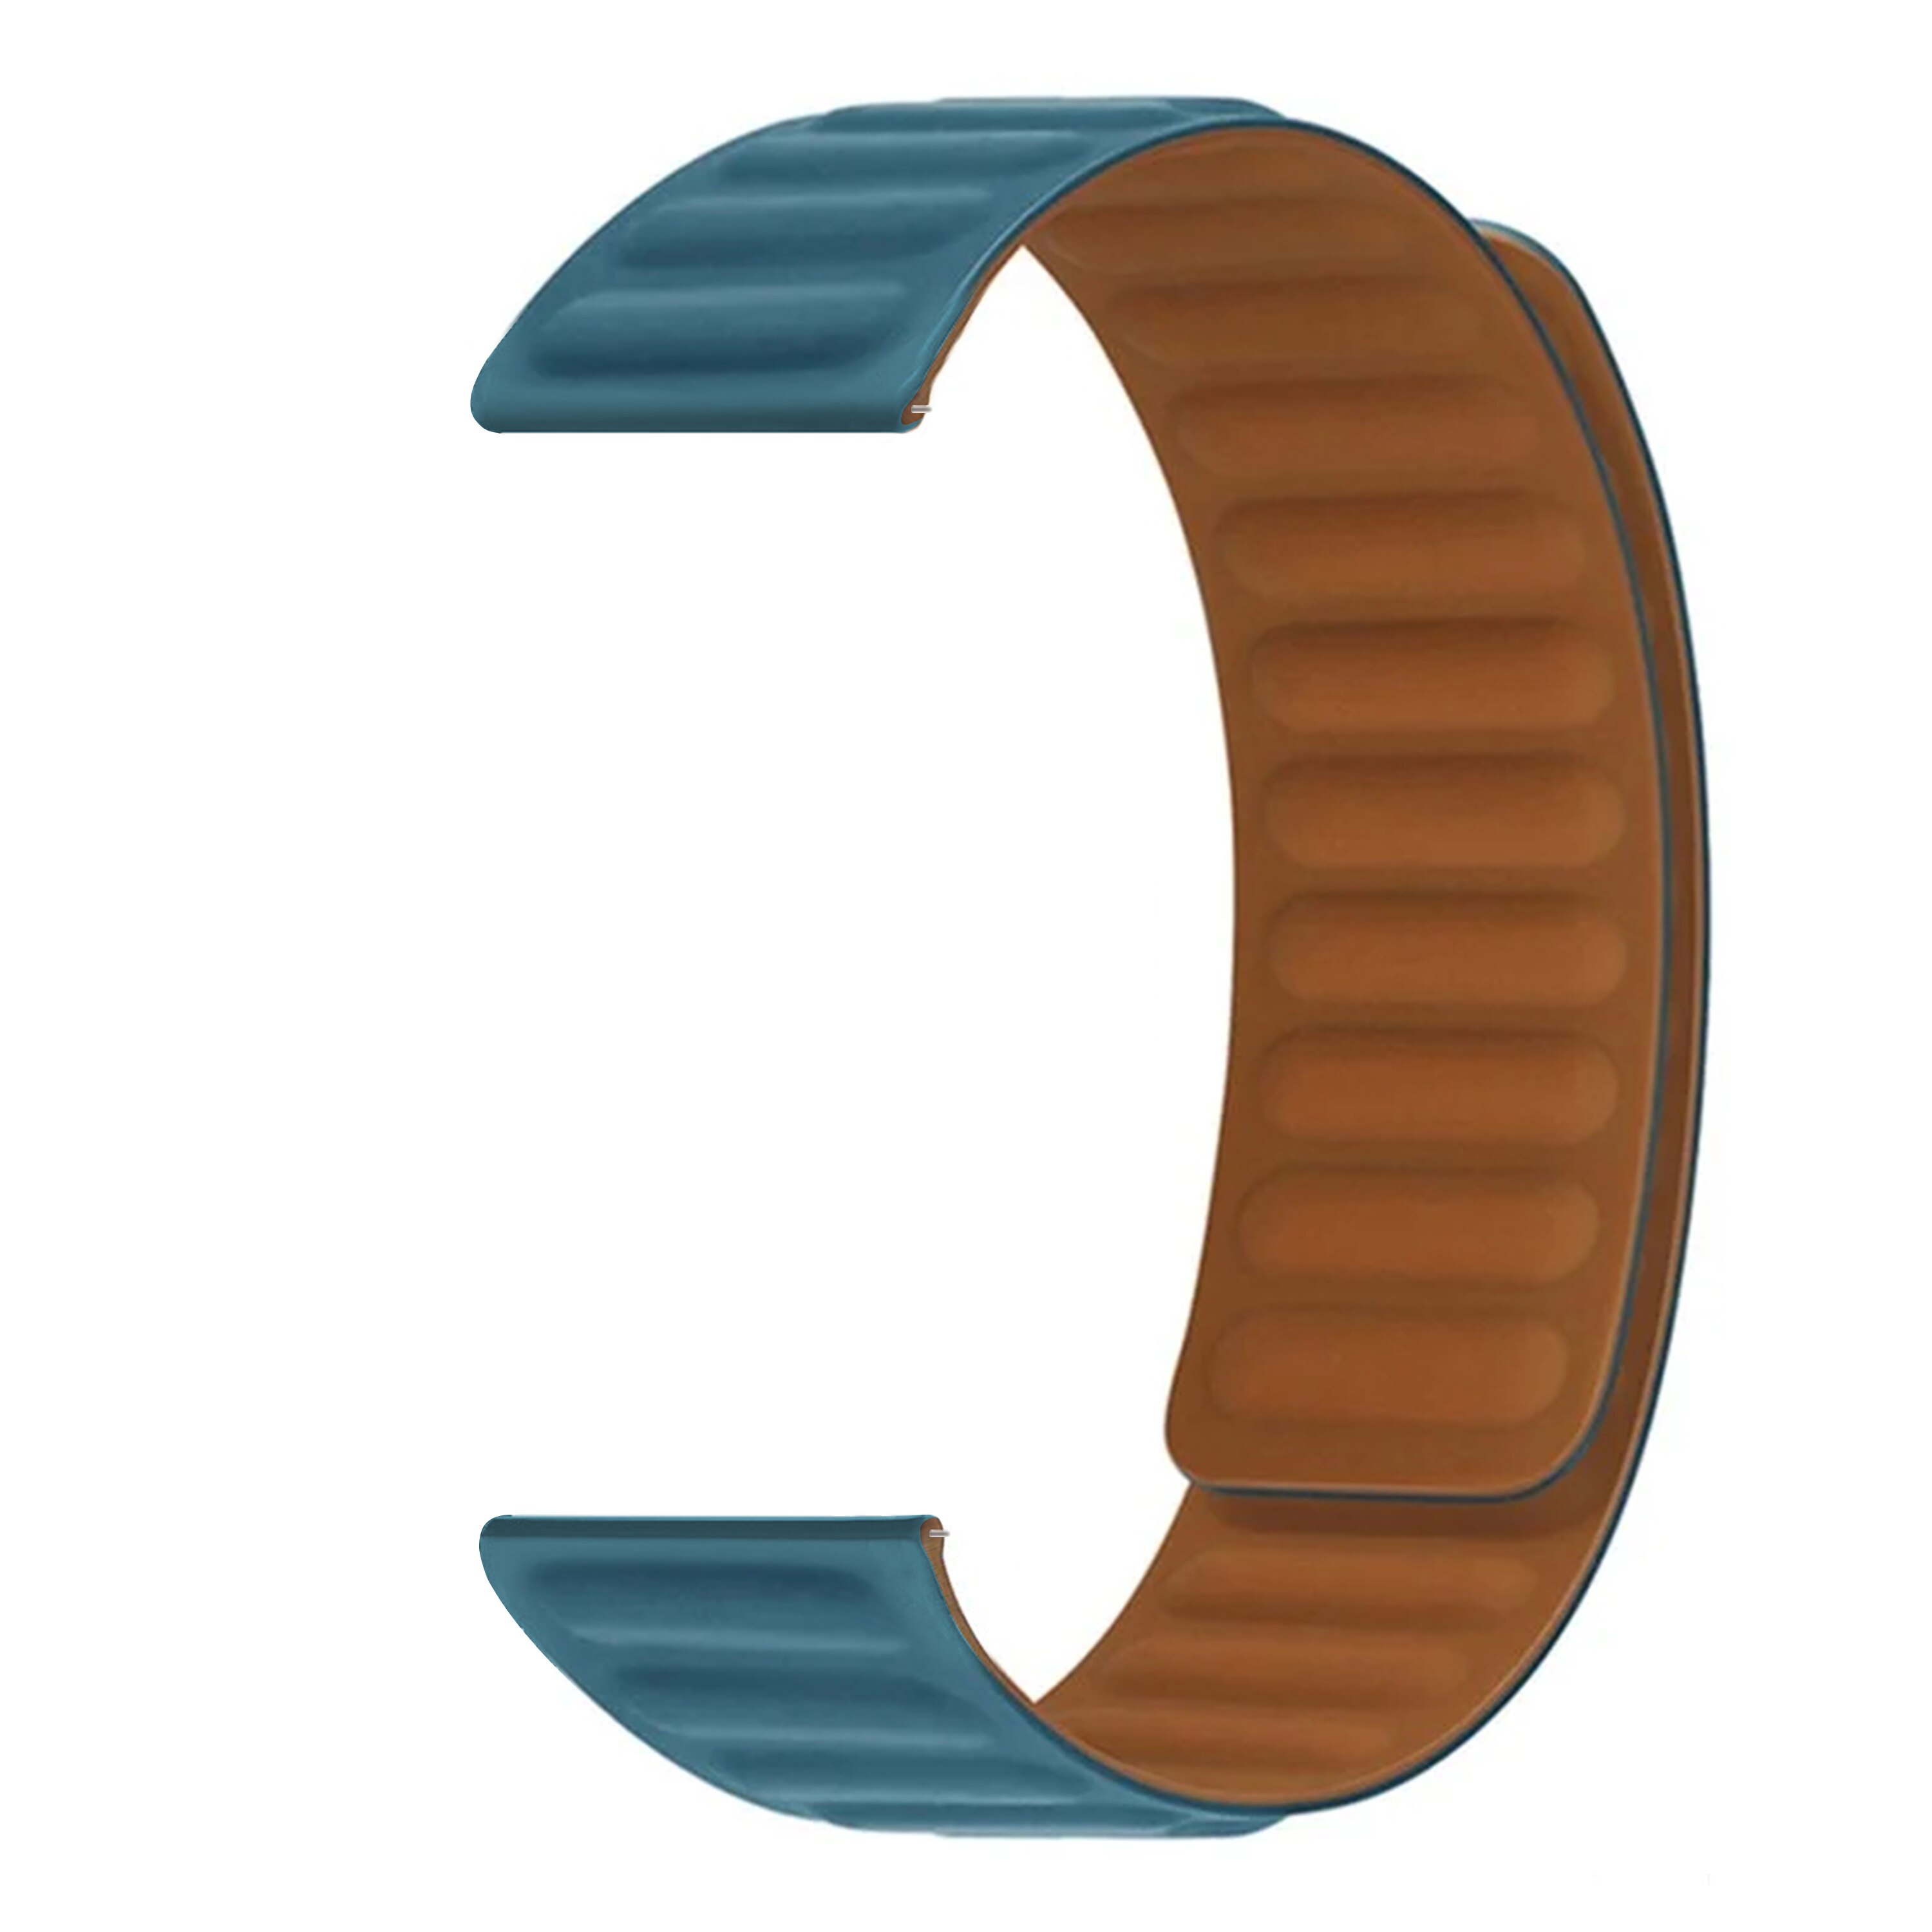 Suunto Race Magnetische Armband aus Silikon blau